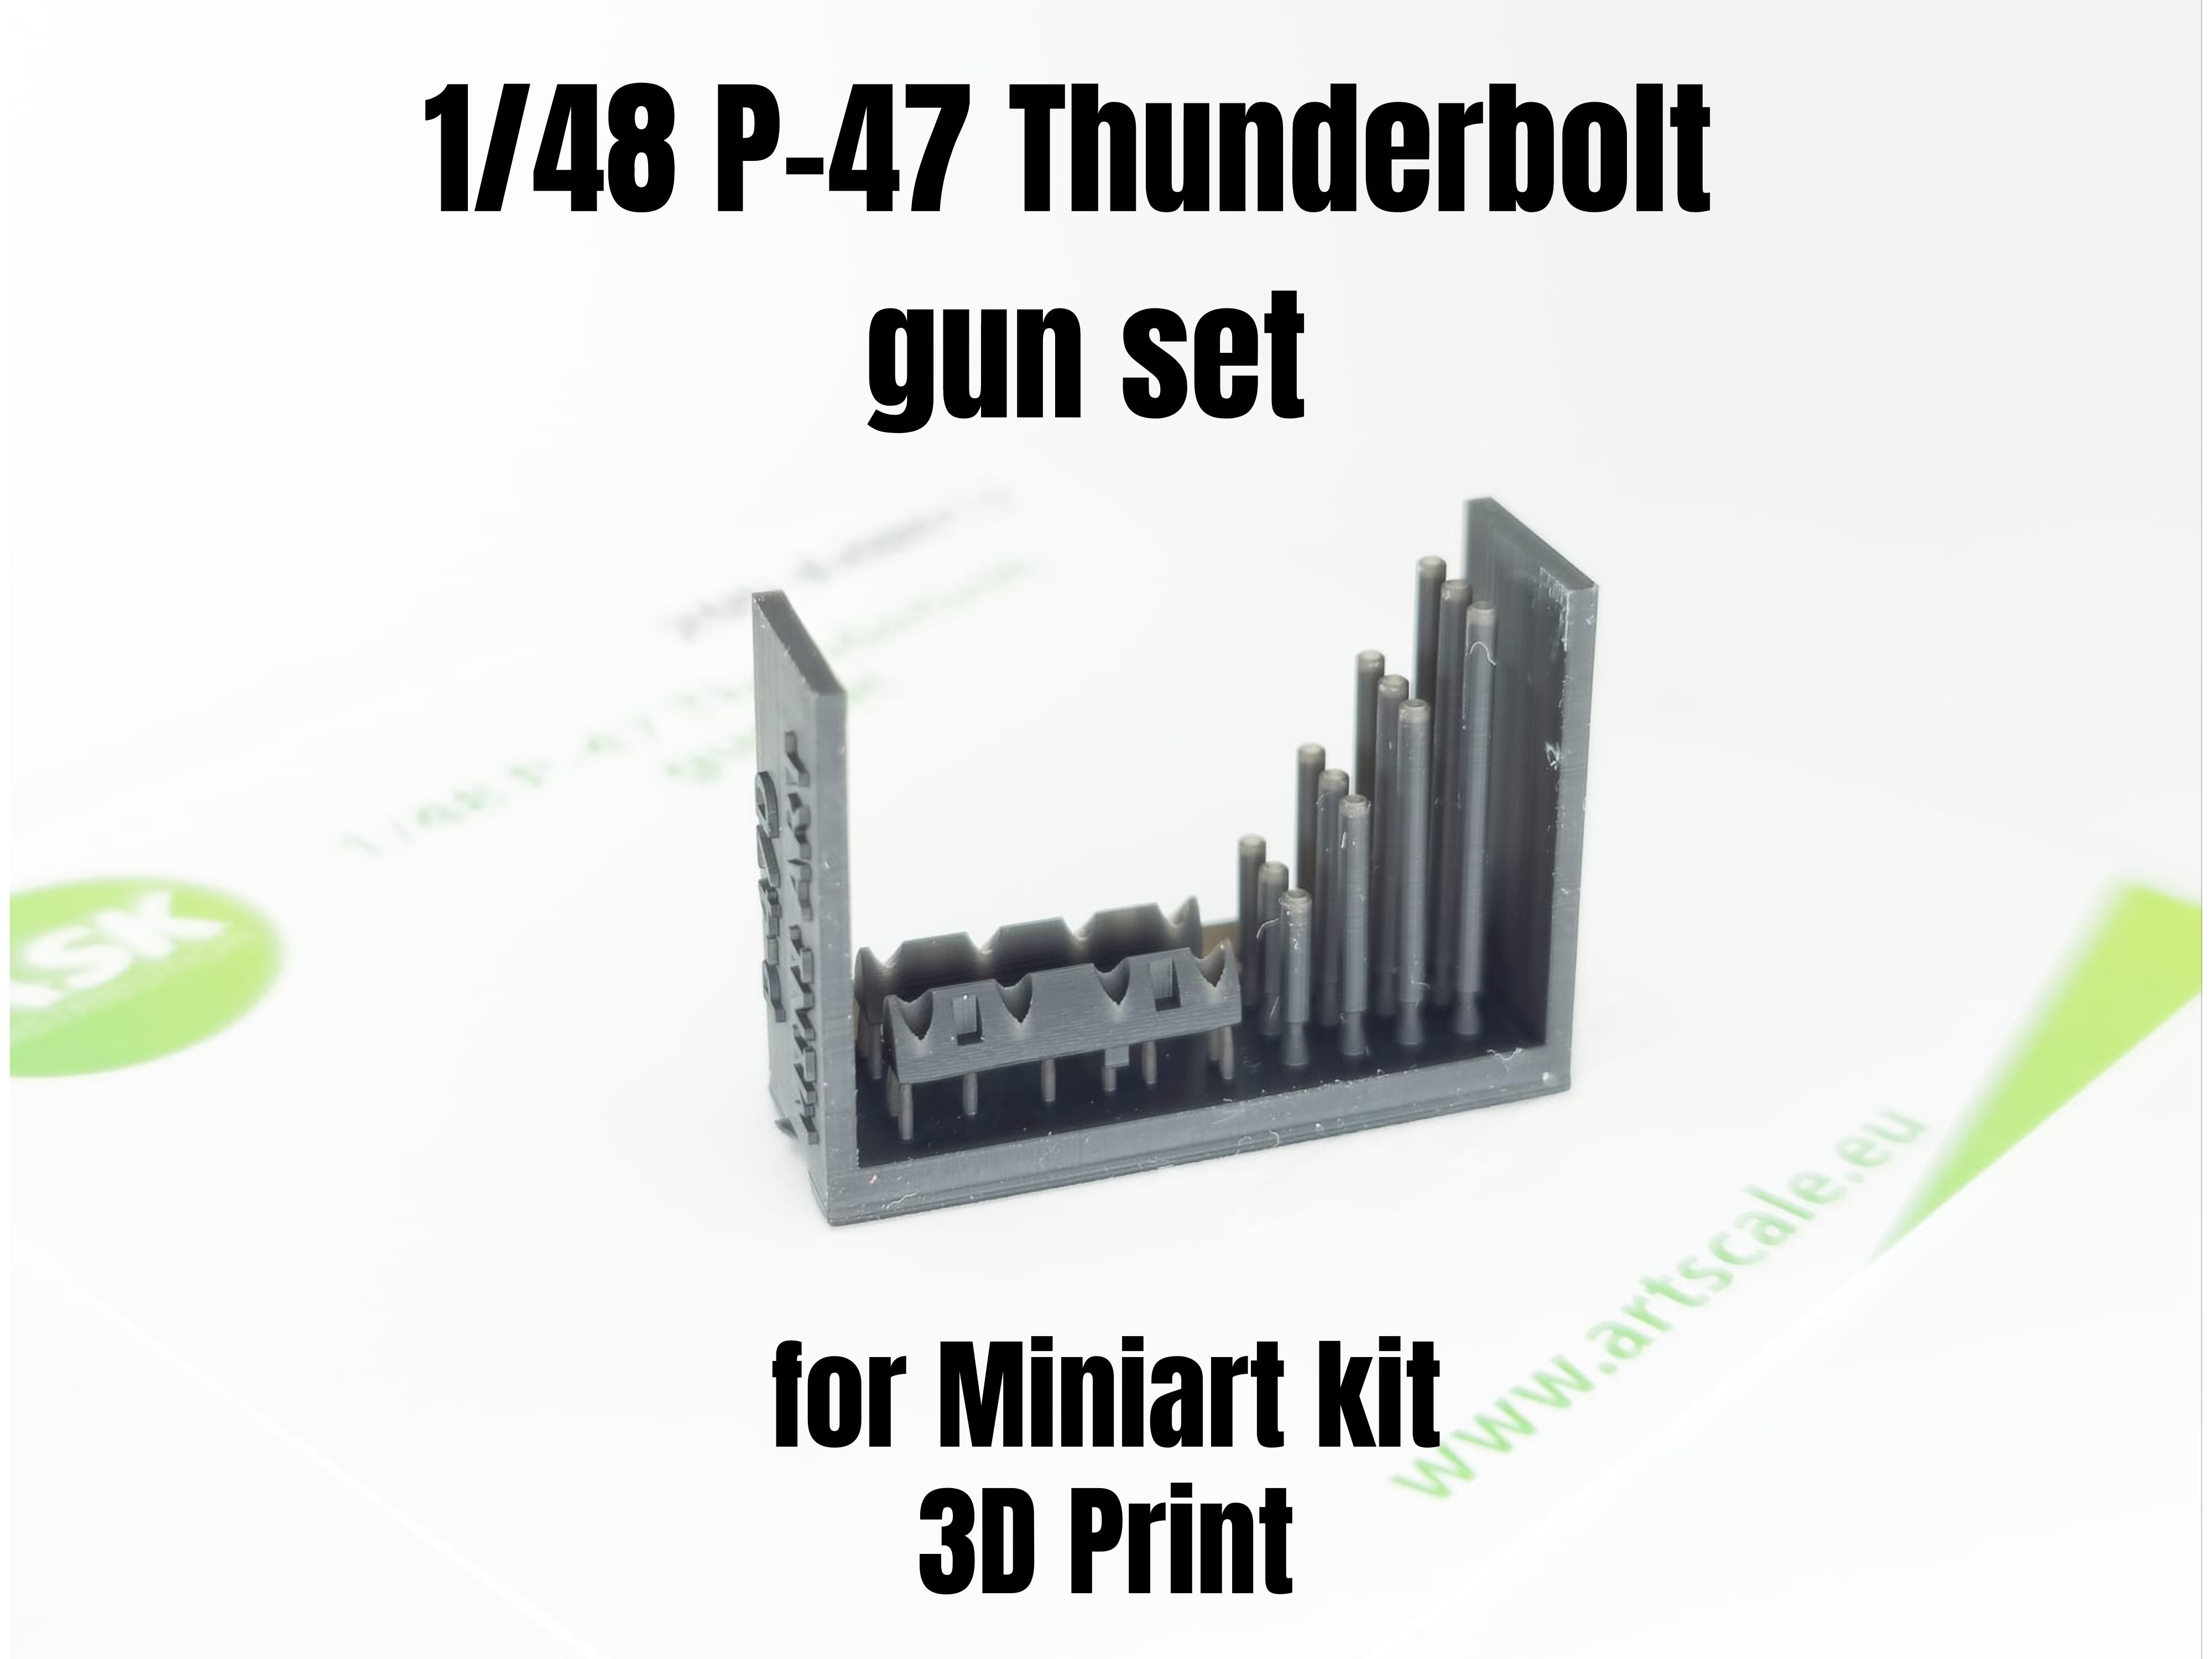 1/48 P-47 Thunderbolt gun set